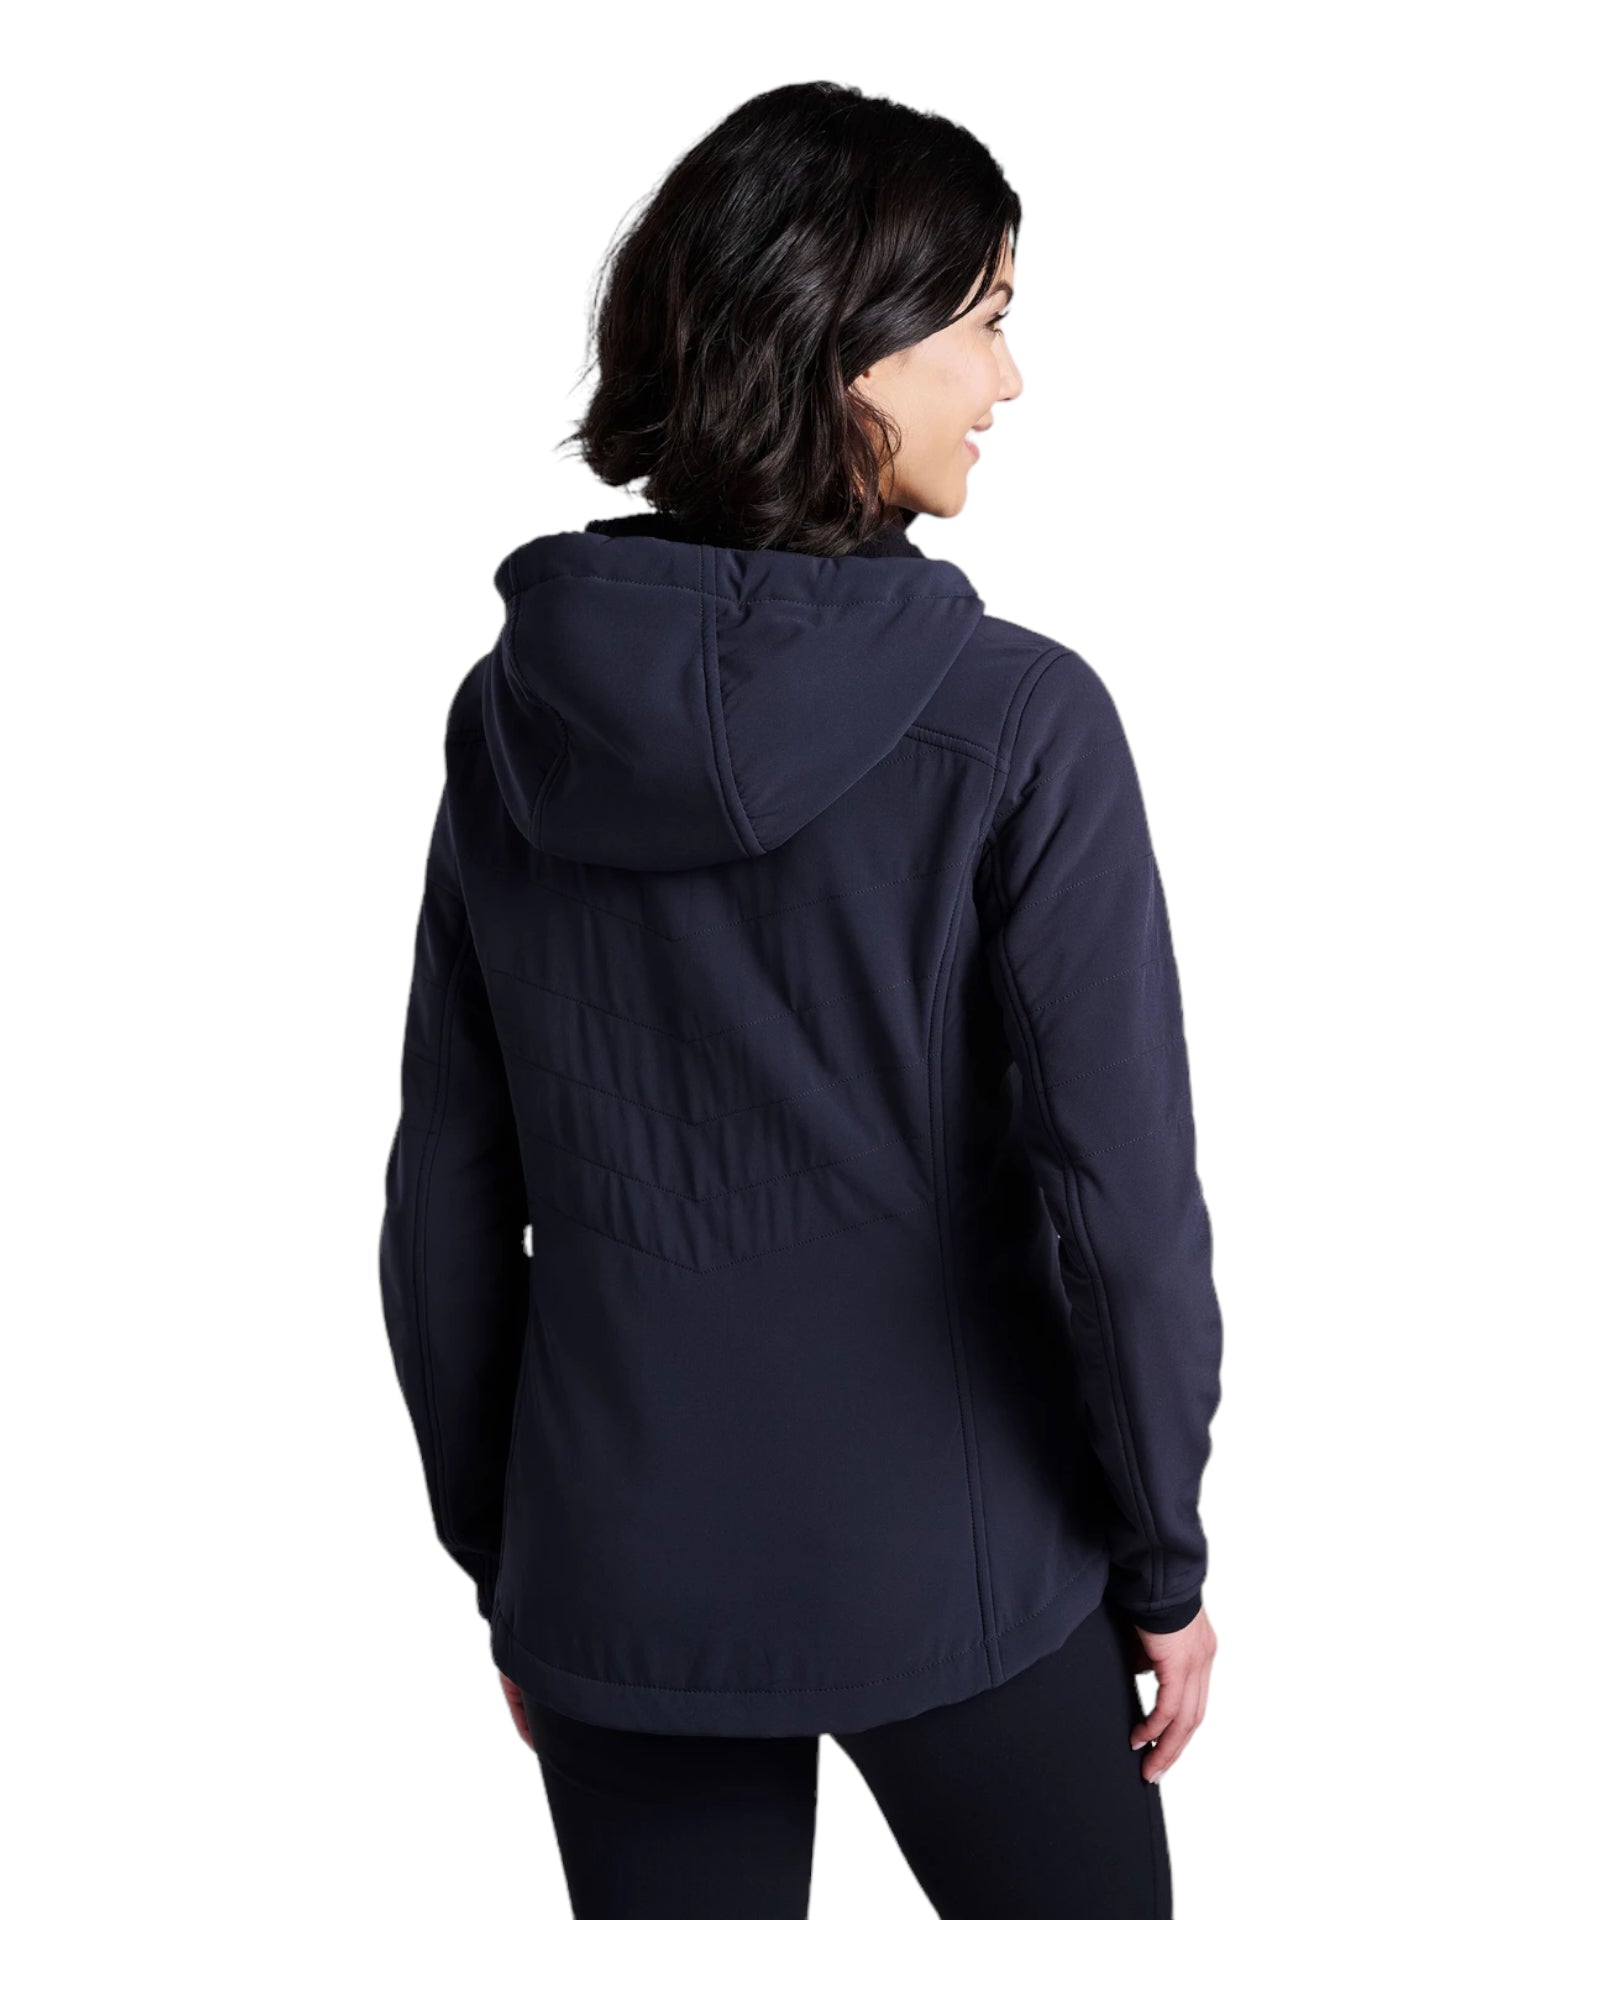 Kuhl 1/2 Zip Fleece Jackets for Women